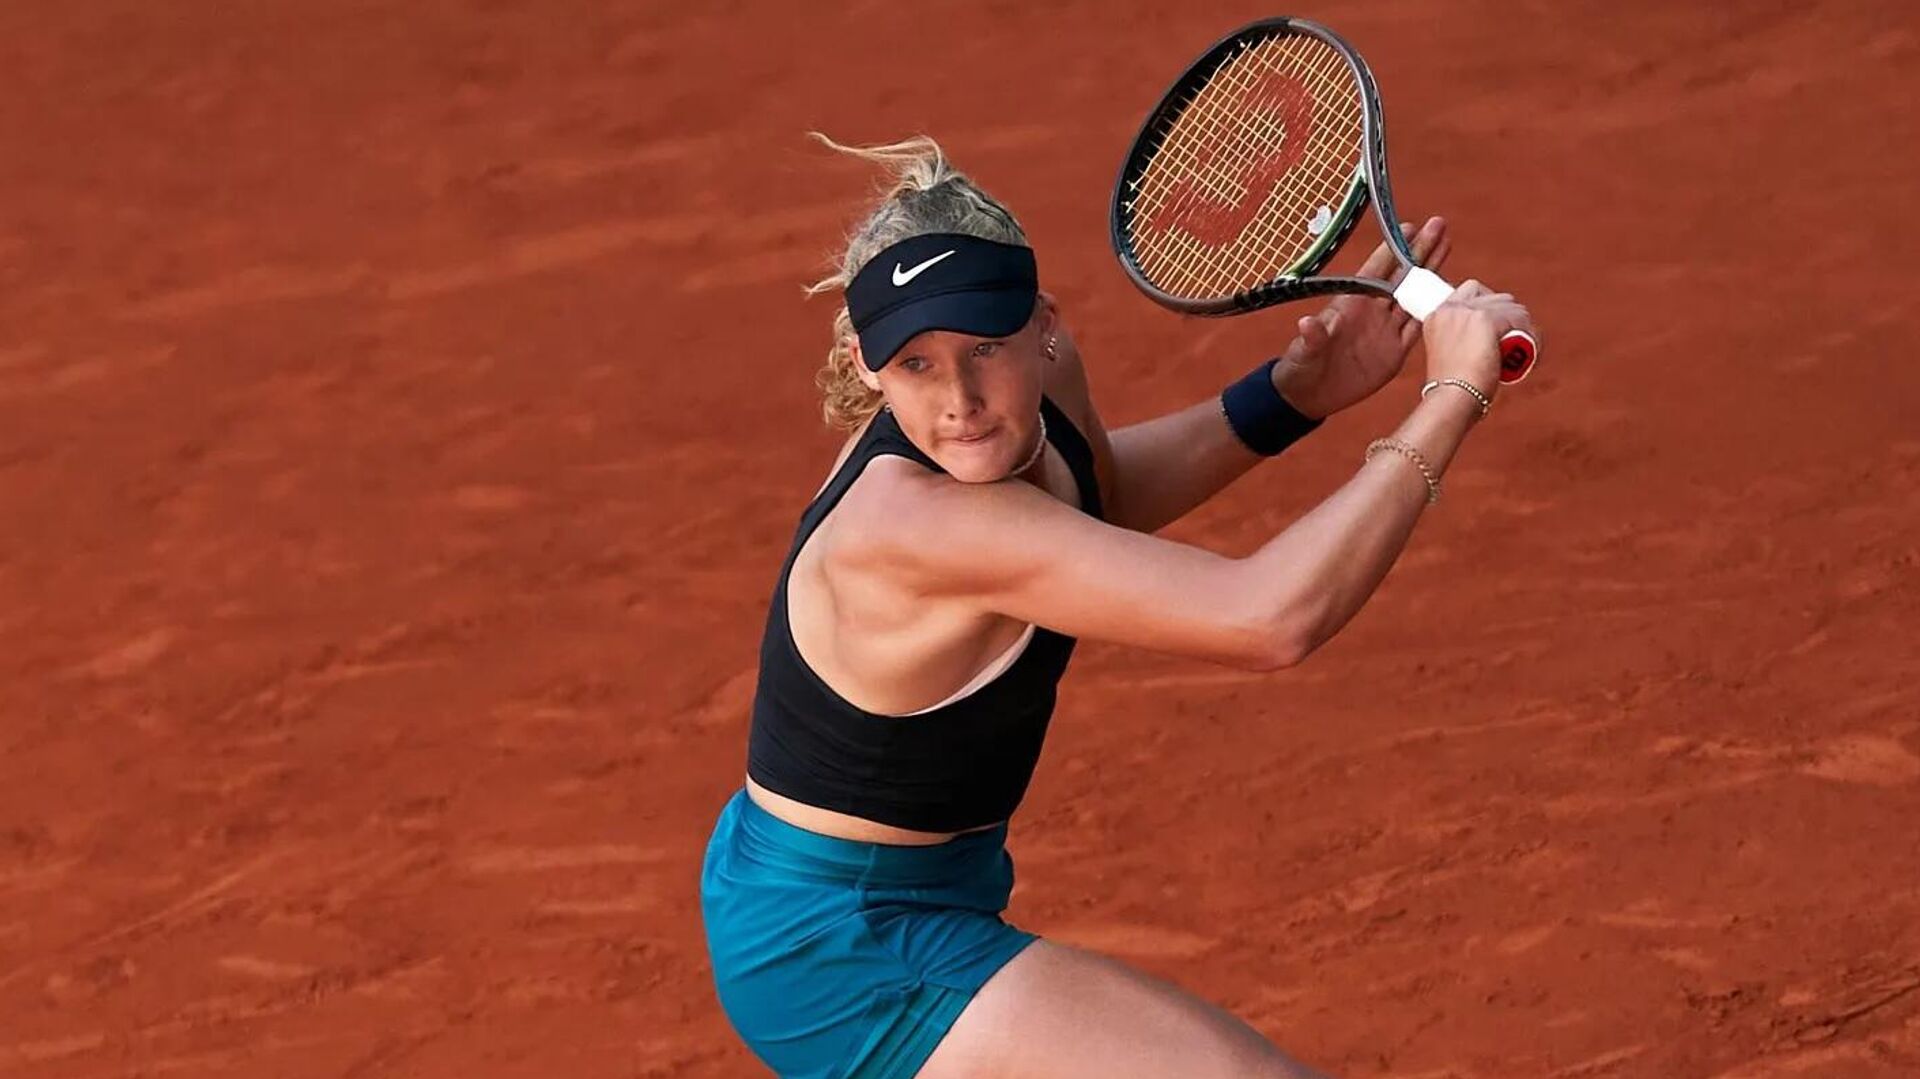 Wimbledon organizers denied visa to 16-year-old Russian tennis player